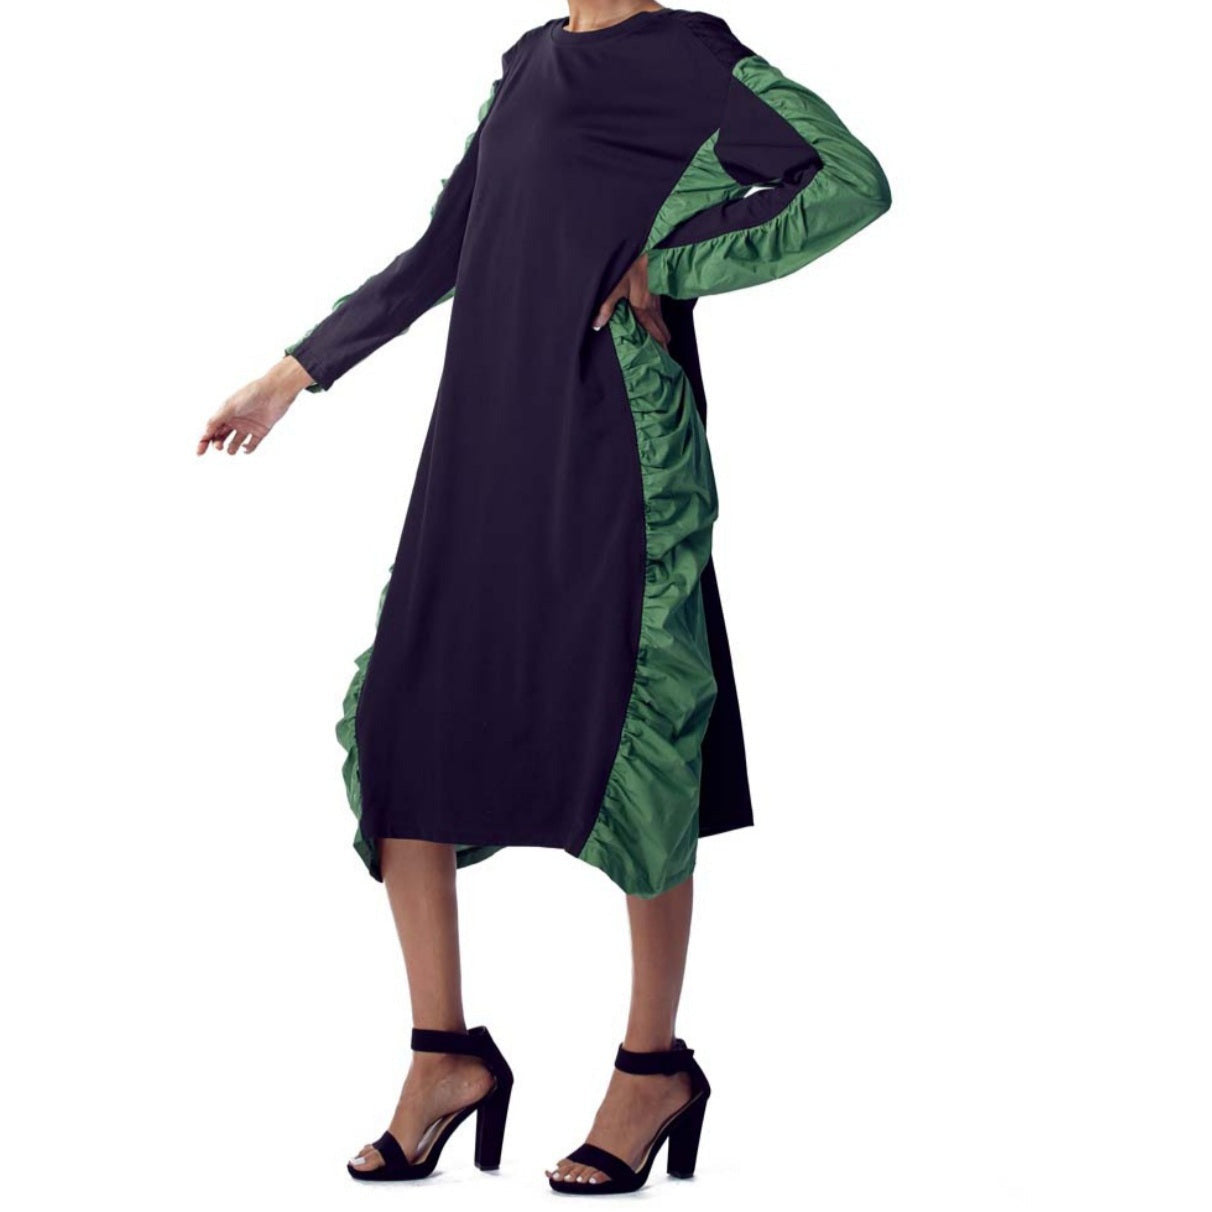 Green Envy Color Block Dress - Ariya's Apparel and Accessories